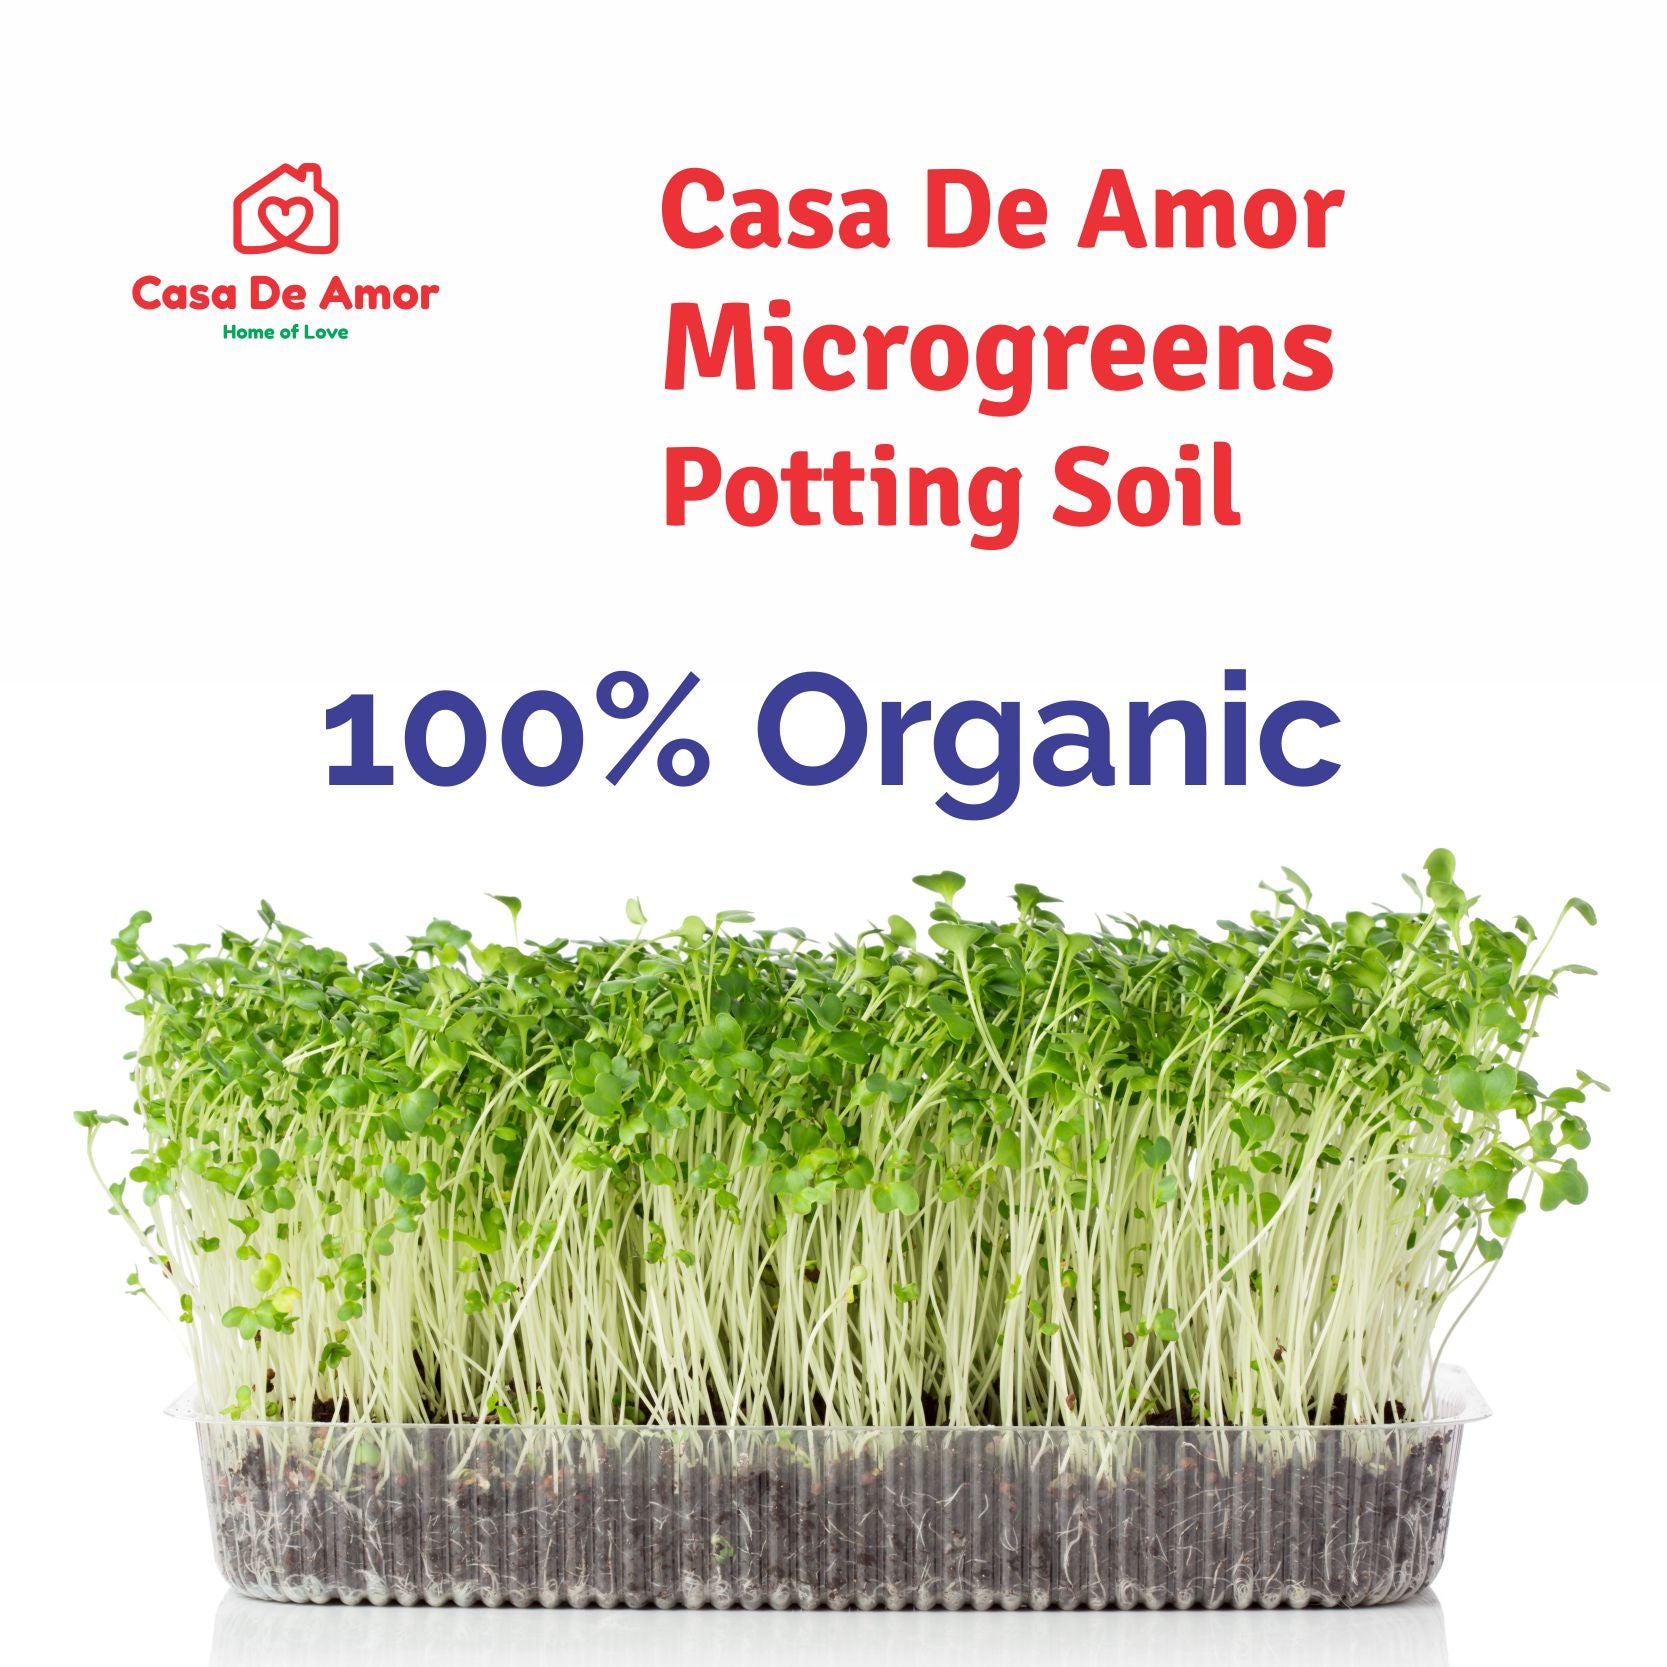 100% organic organic potting soil for microgreens